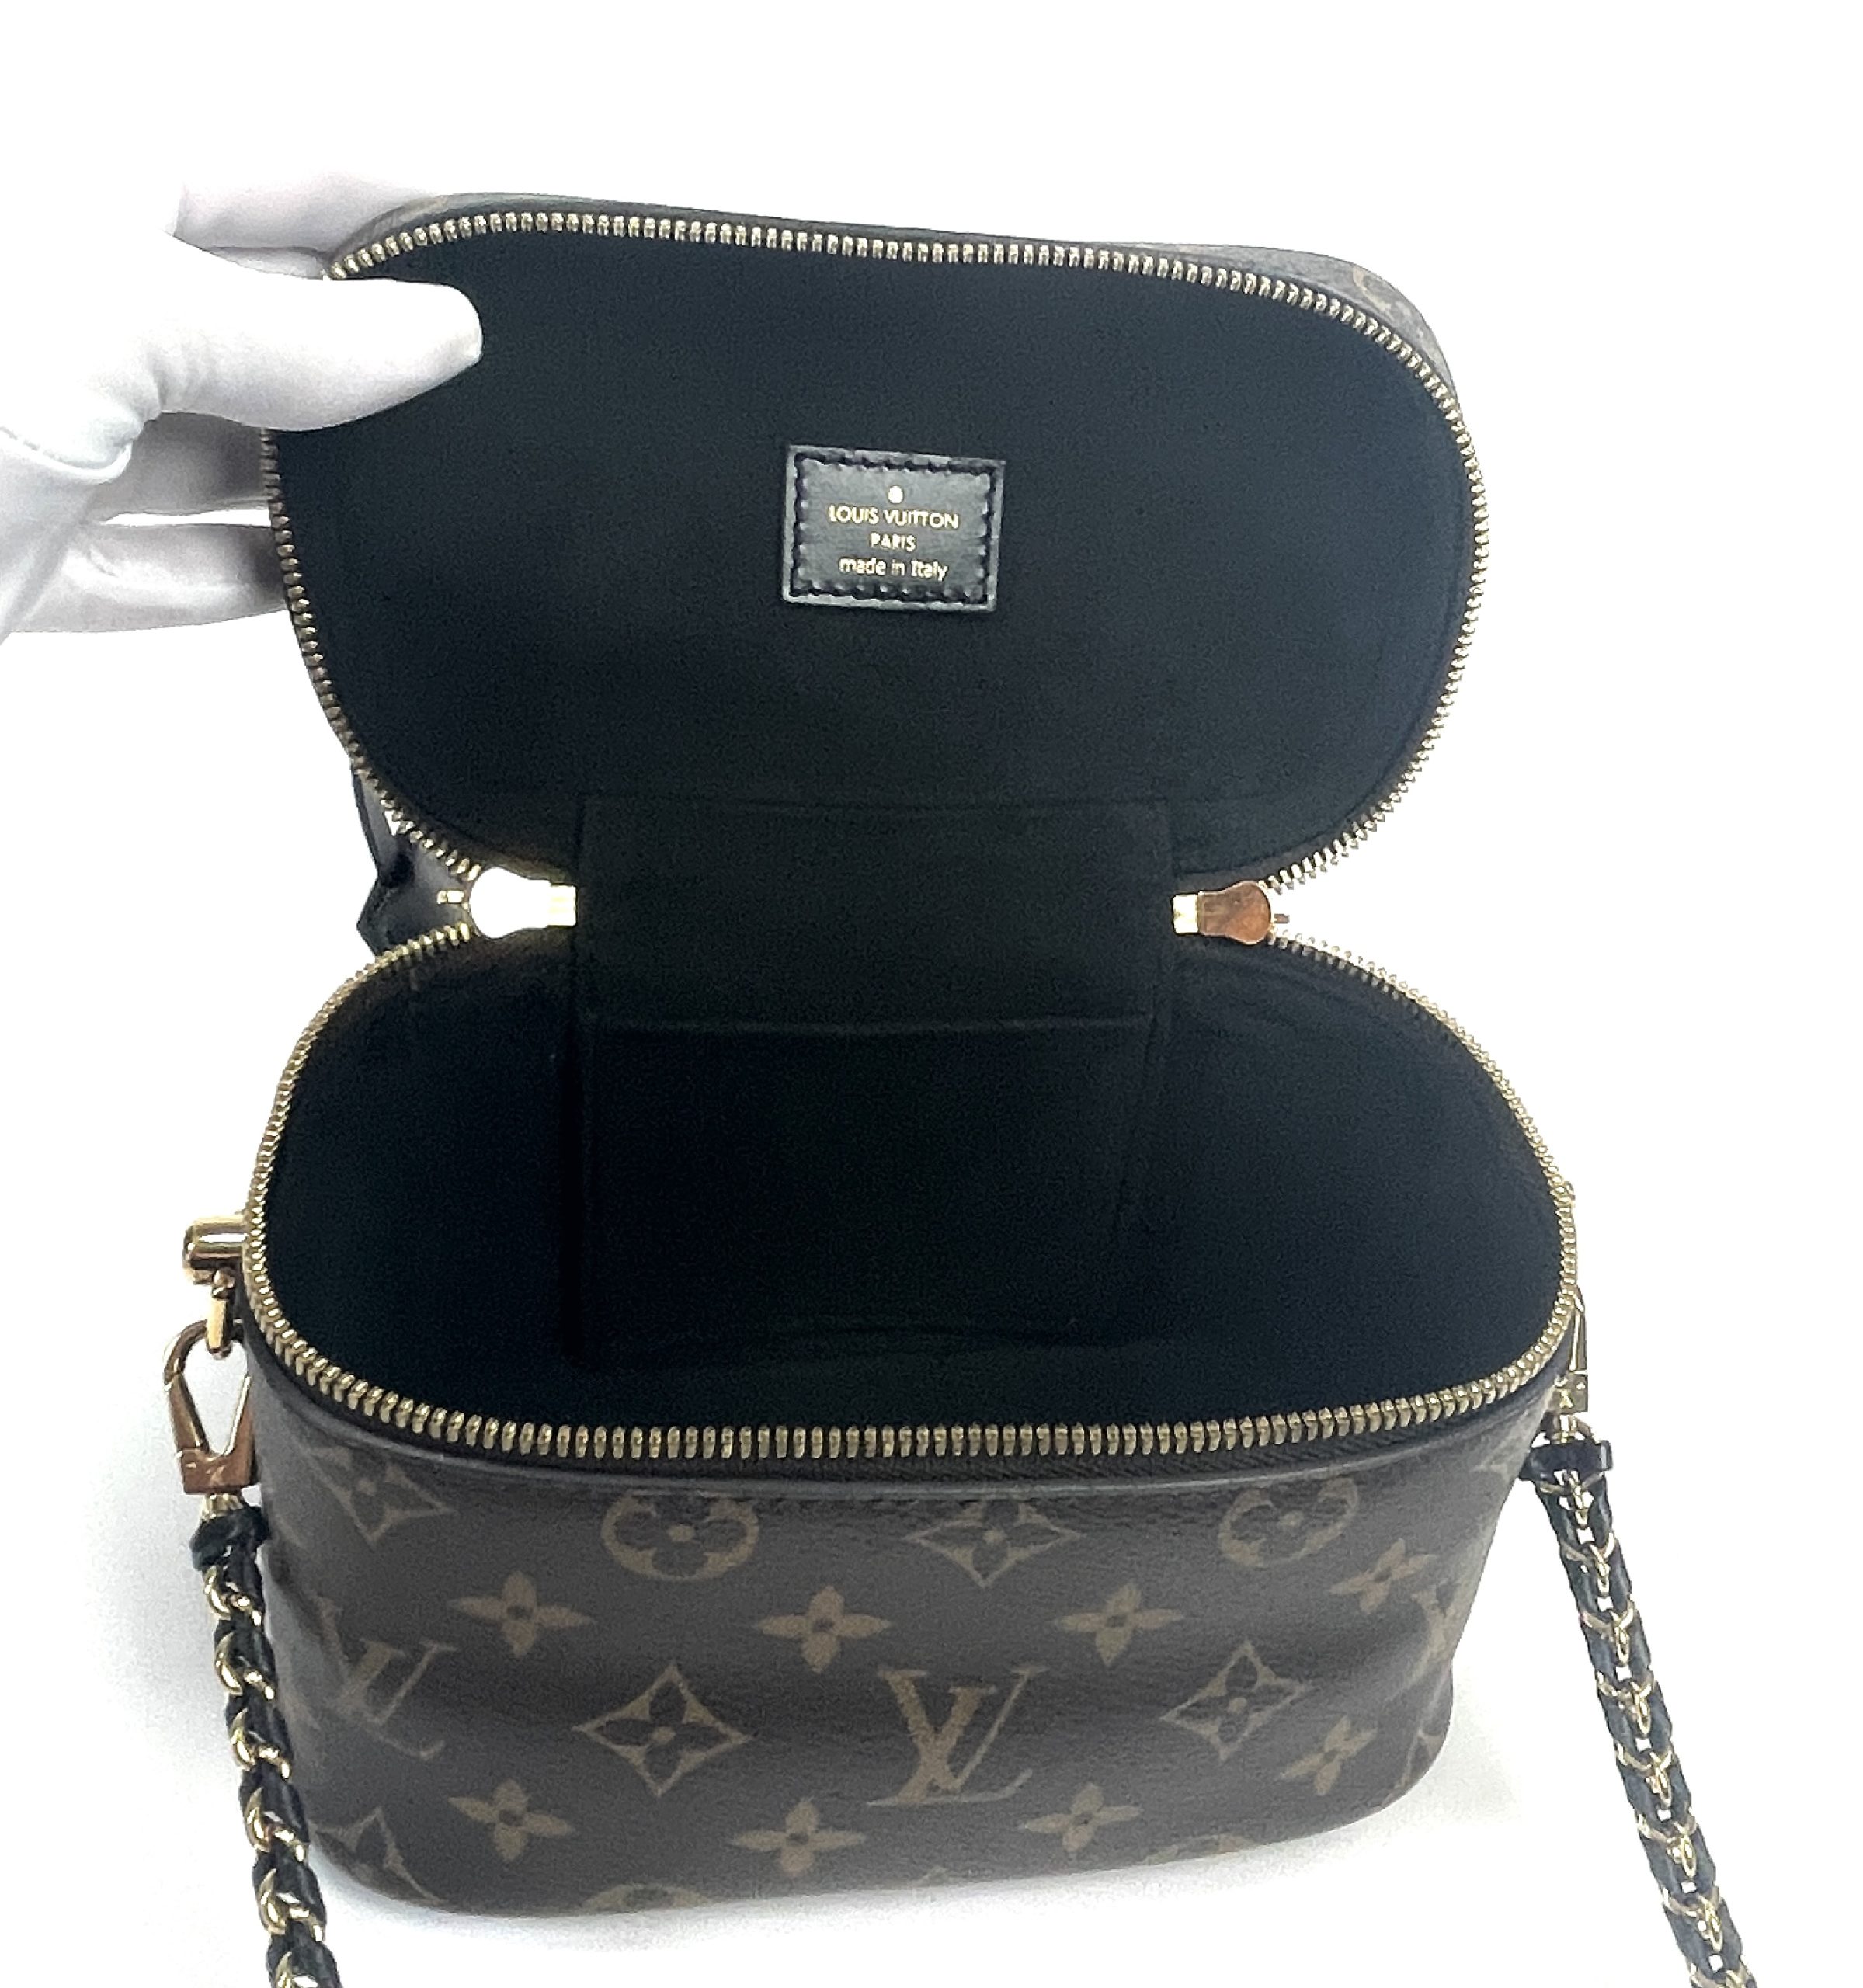 Black Checkered LV Louis Vuitton Luxury High End Airpods Pro Case